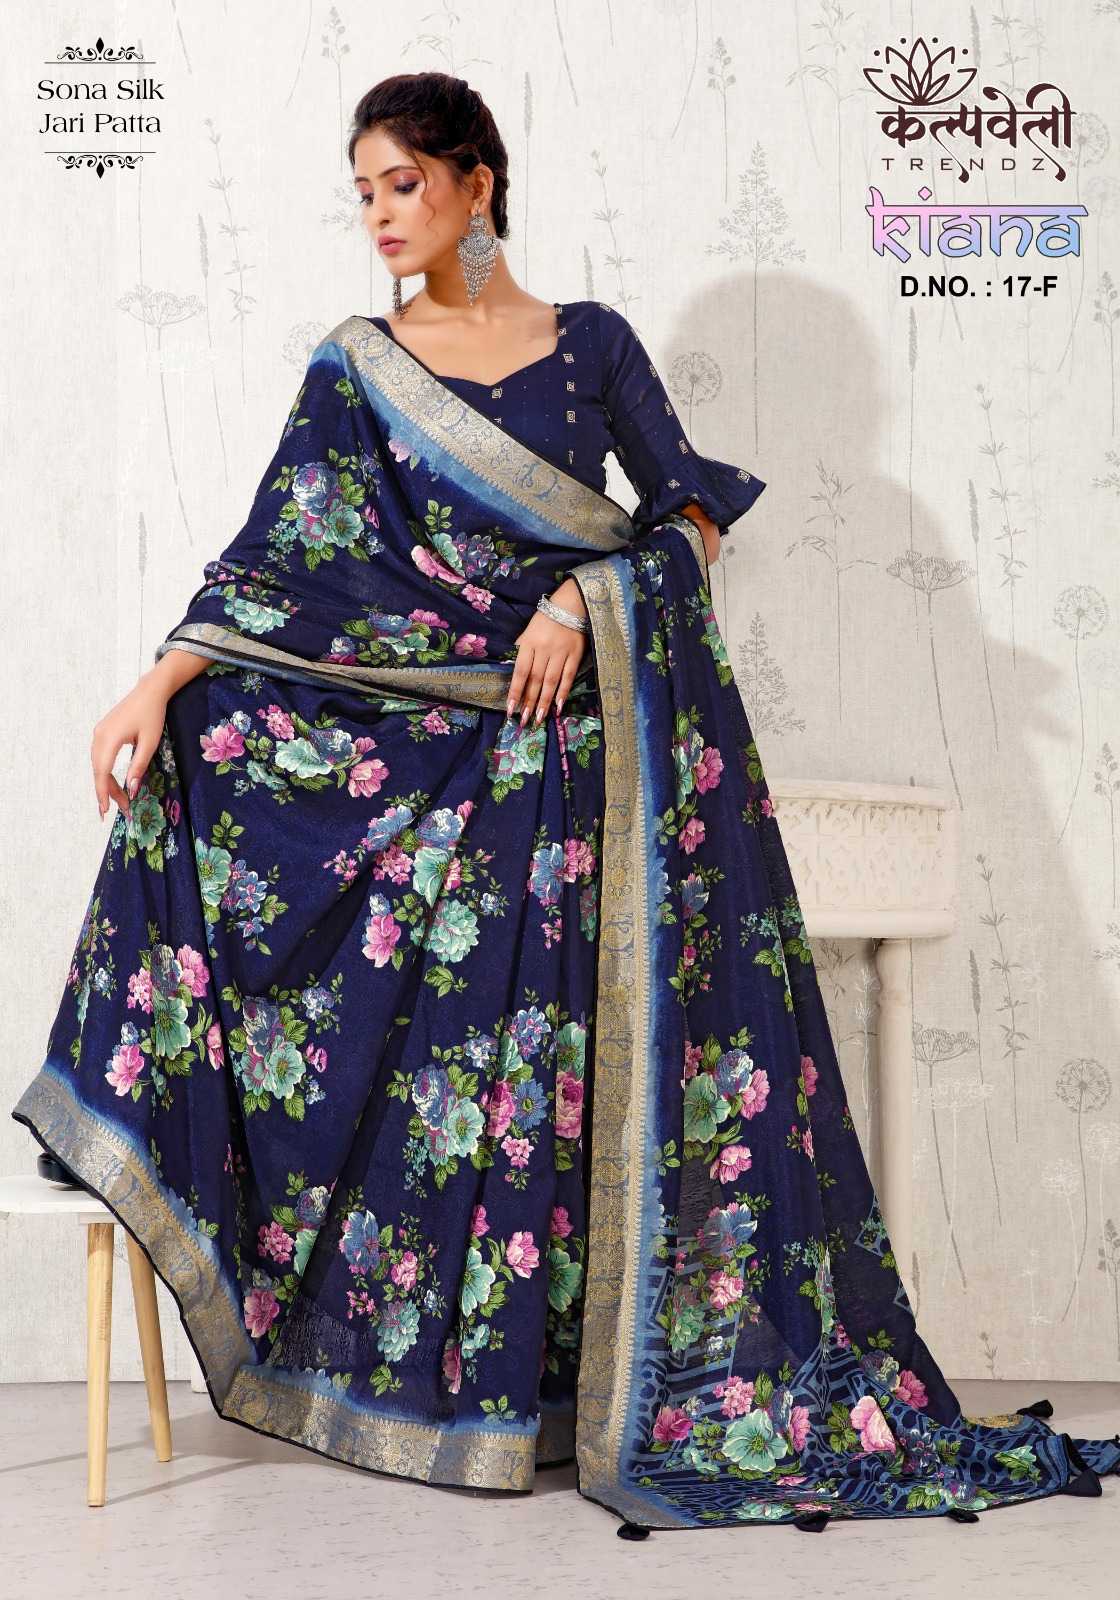 kalpavelly trendz kiana 17-18 beautiful casual wear sarees catalog